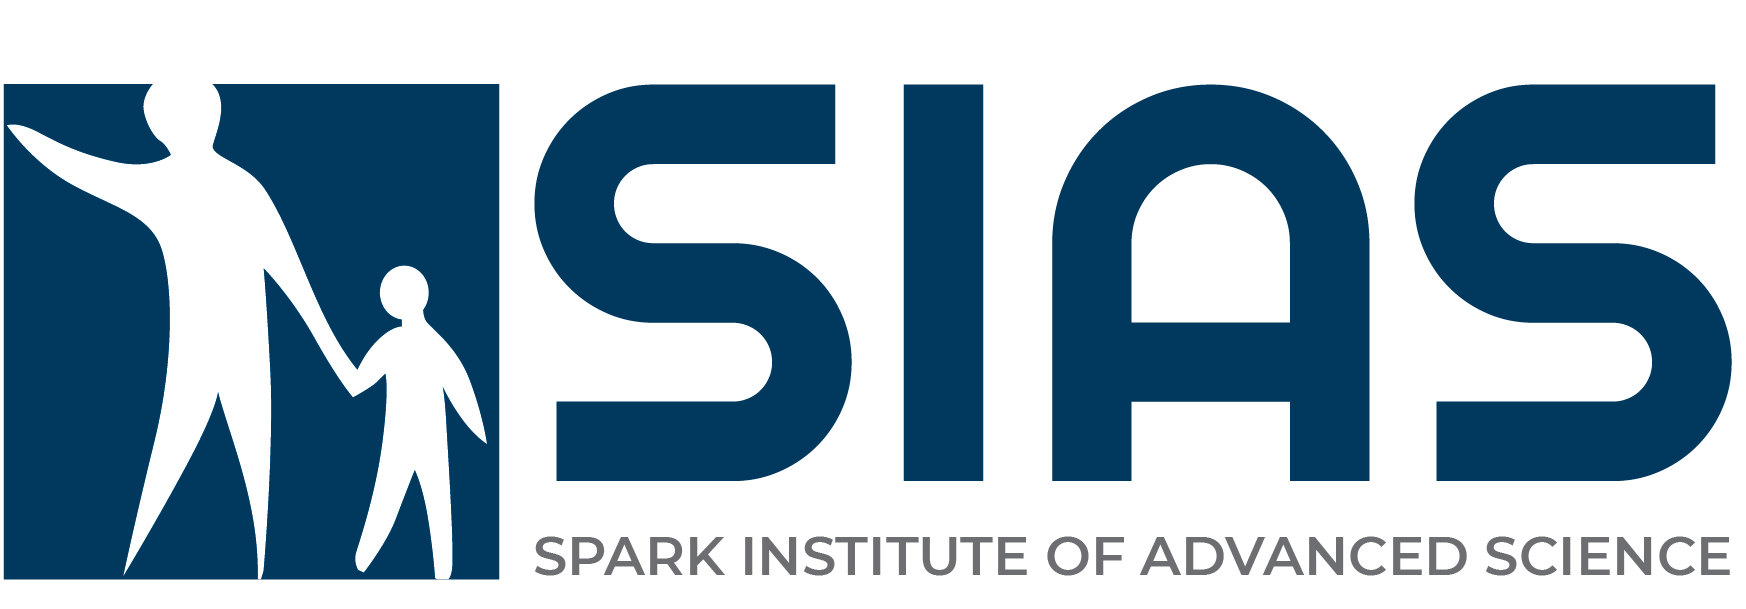 Spark Institute of Advanced Science (SIAS)